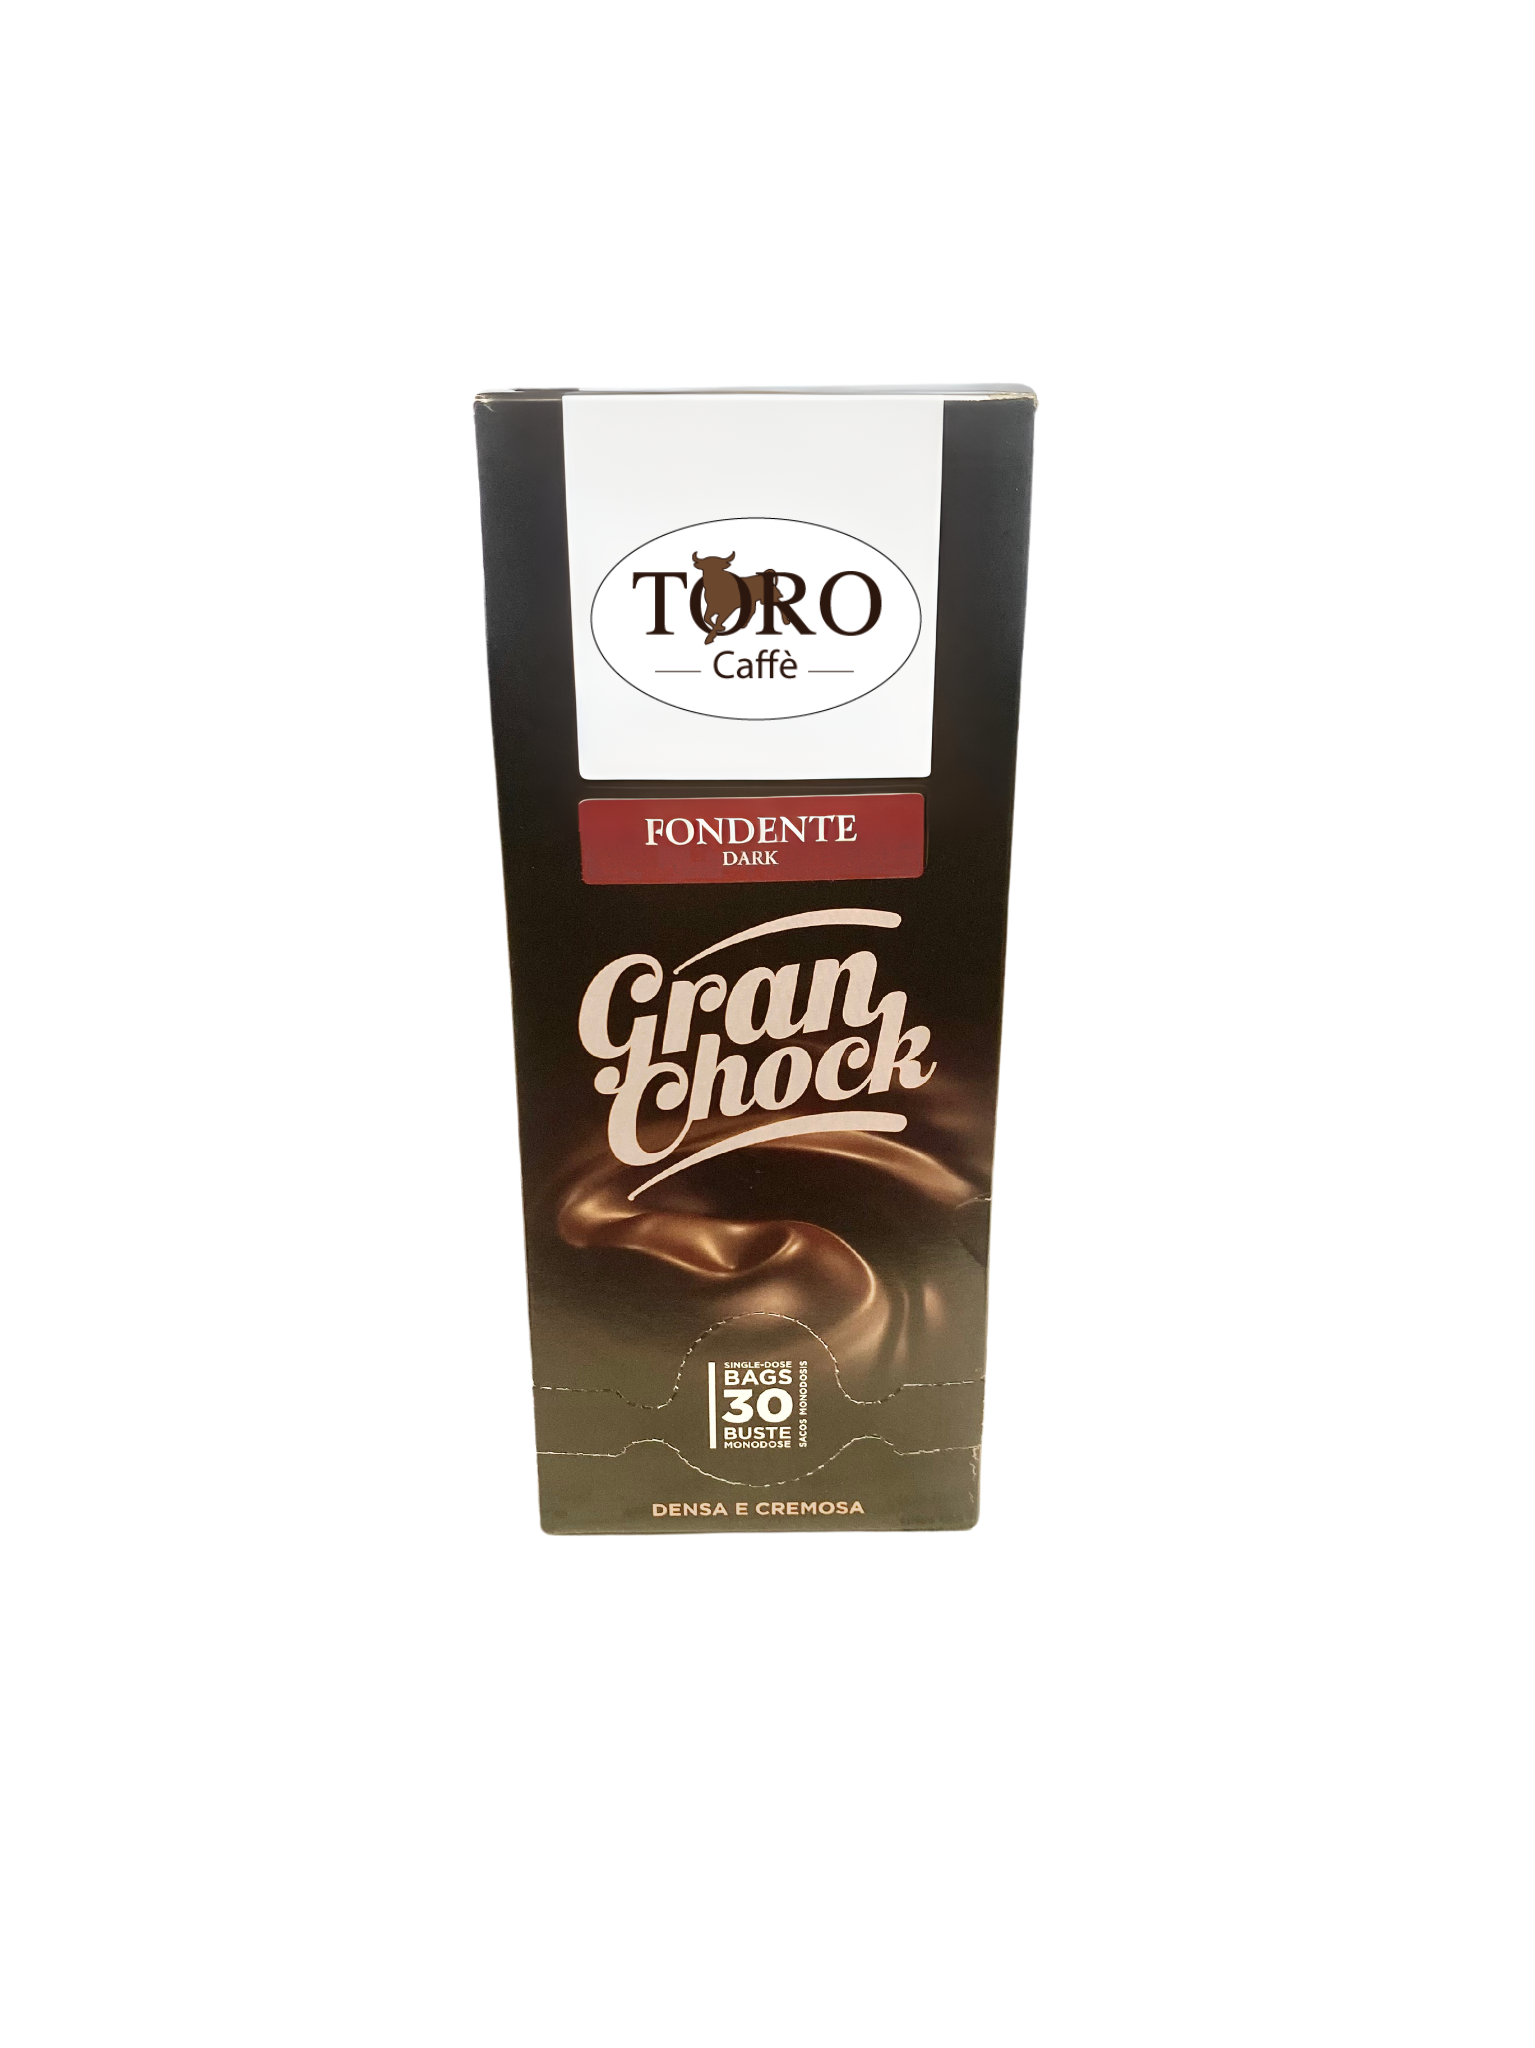 Cioccolata Densa Fondente Dark GranChock Toro